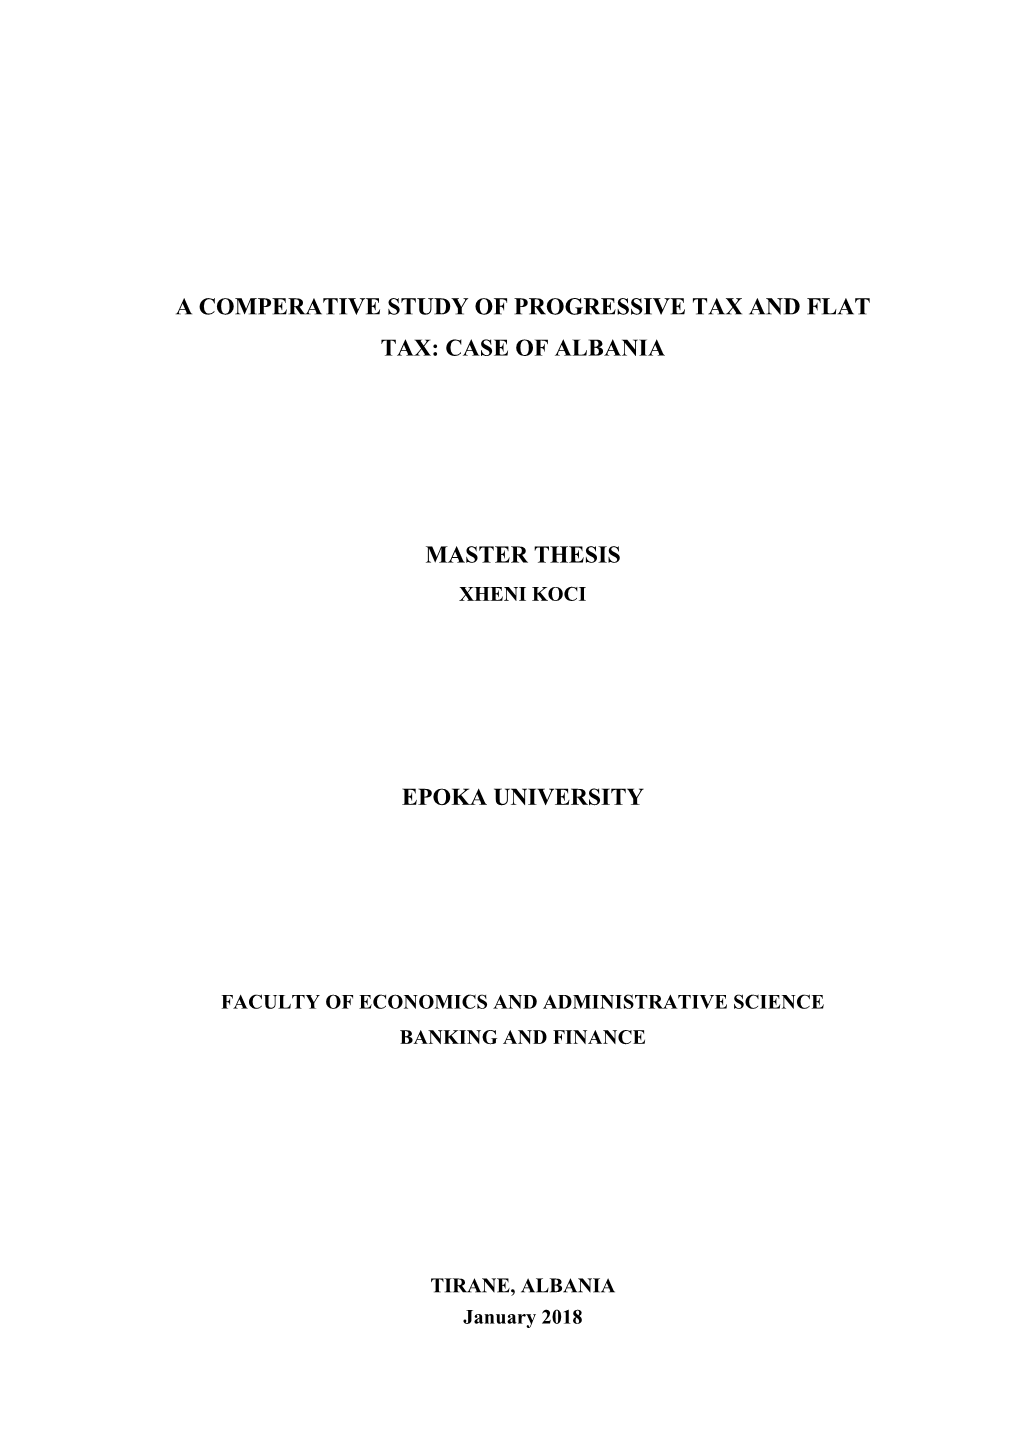 A Comperative Study of Progressive Tax and Flat Tax: Case of Albania Master Thesis Epoka University